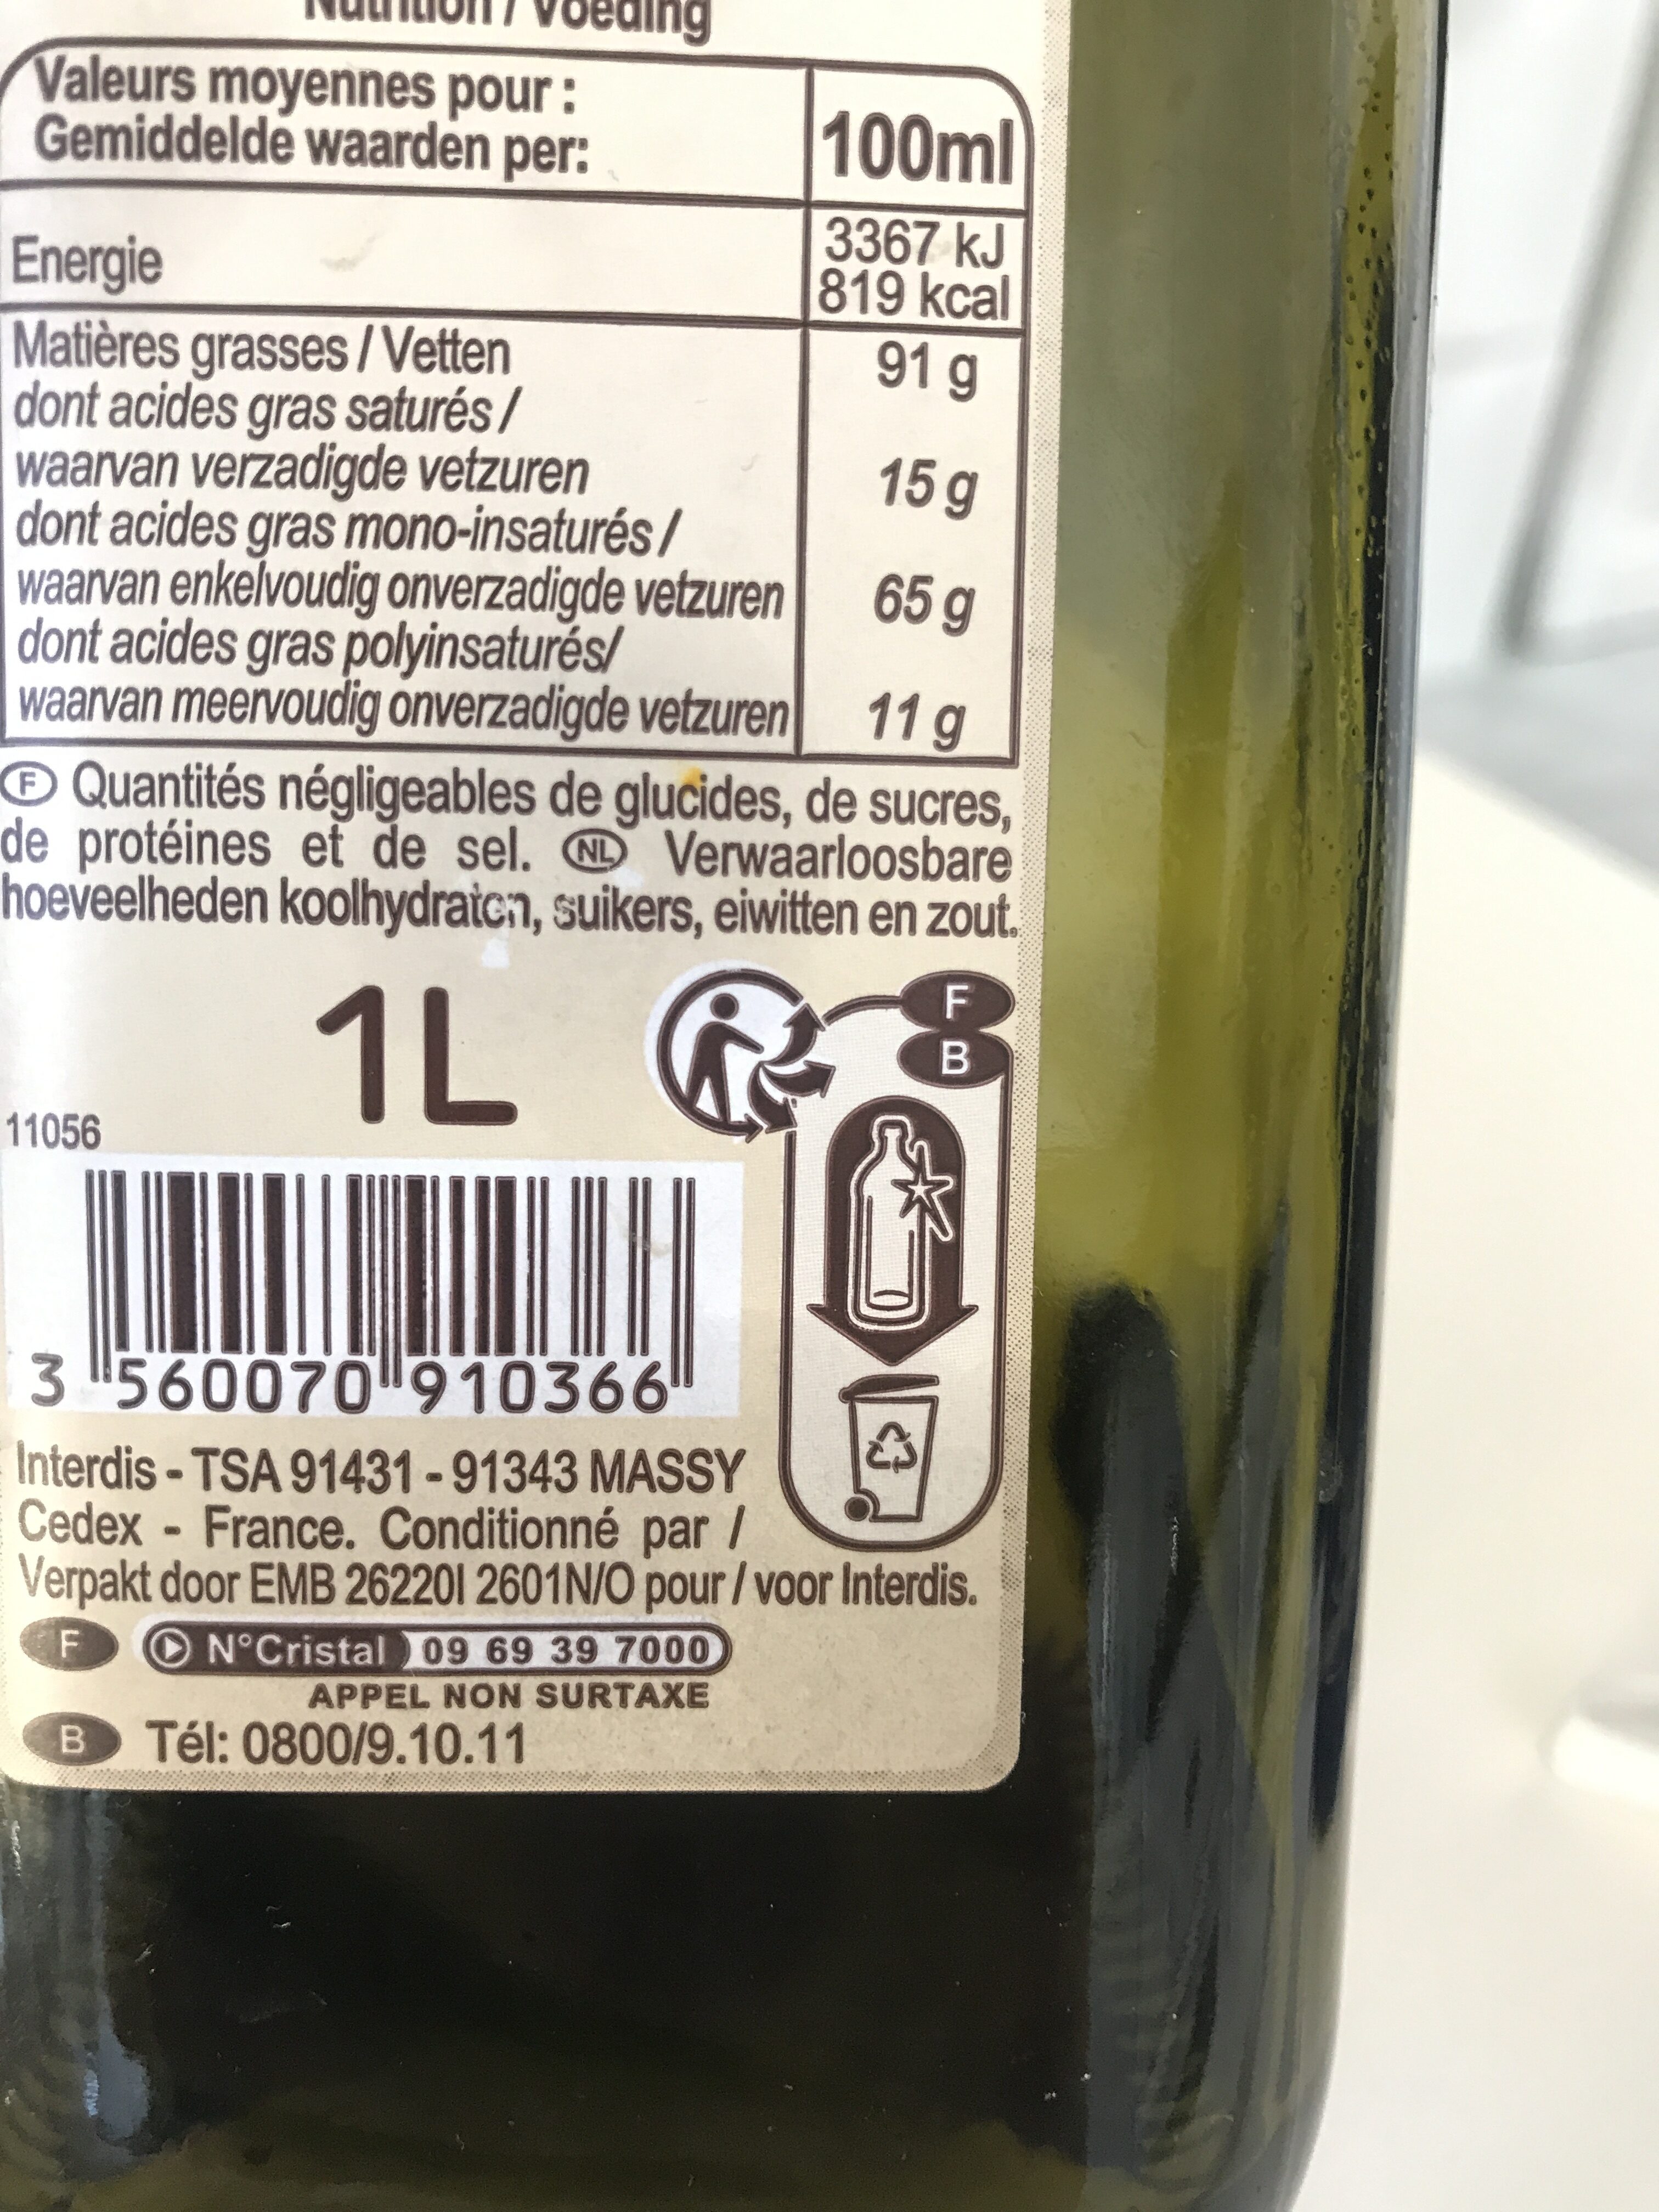 Huile d'olive vierge extra - Instruction de recyclage et/ou informations d'emballage